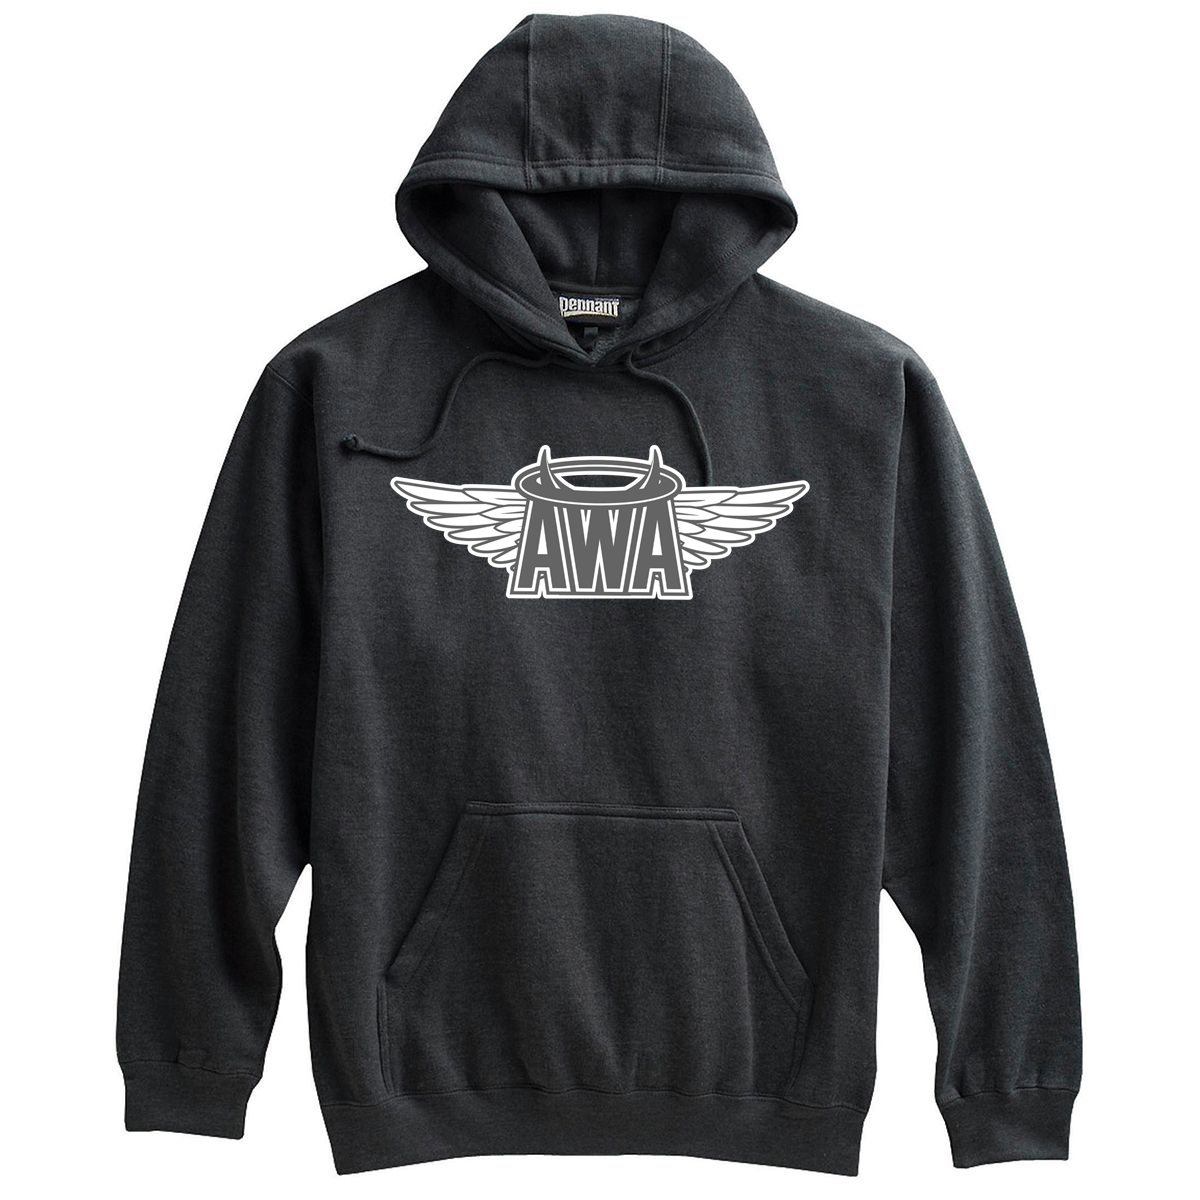 Angels With Attitude Sweatshirt